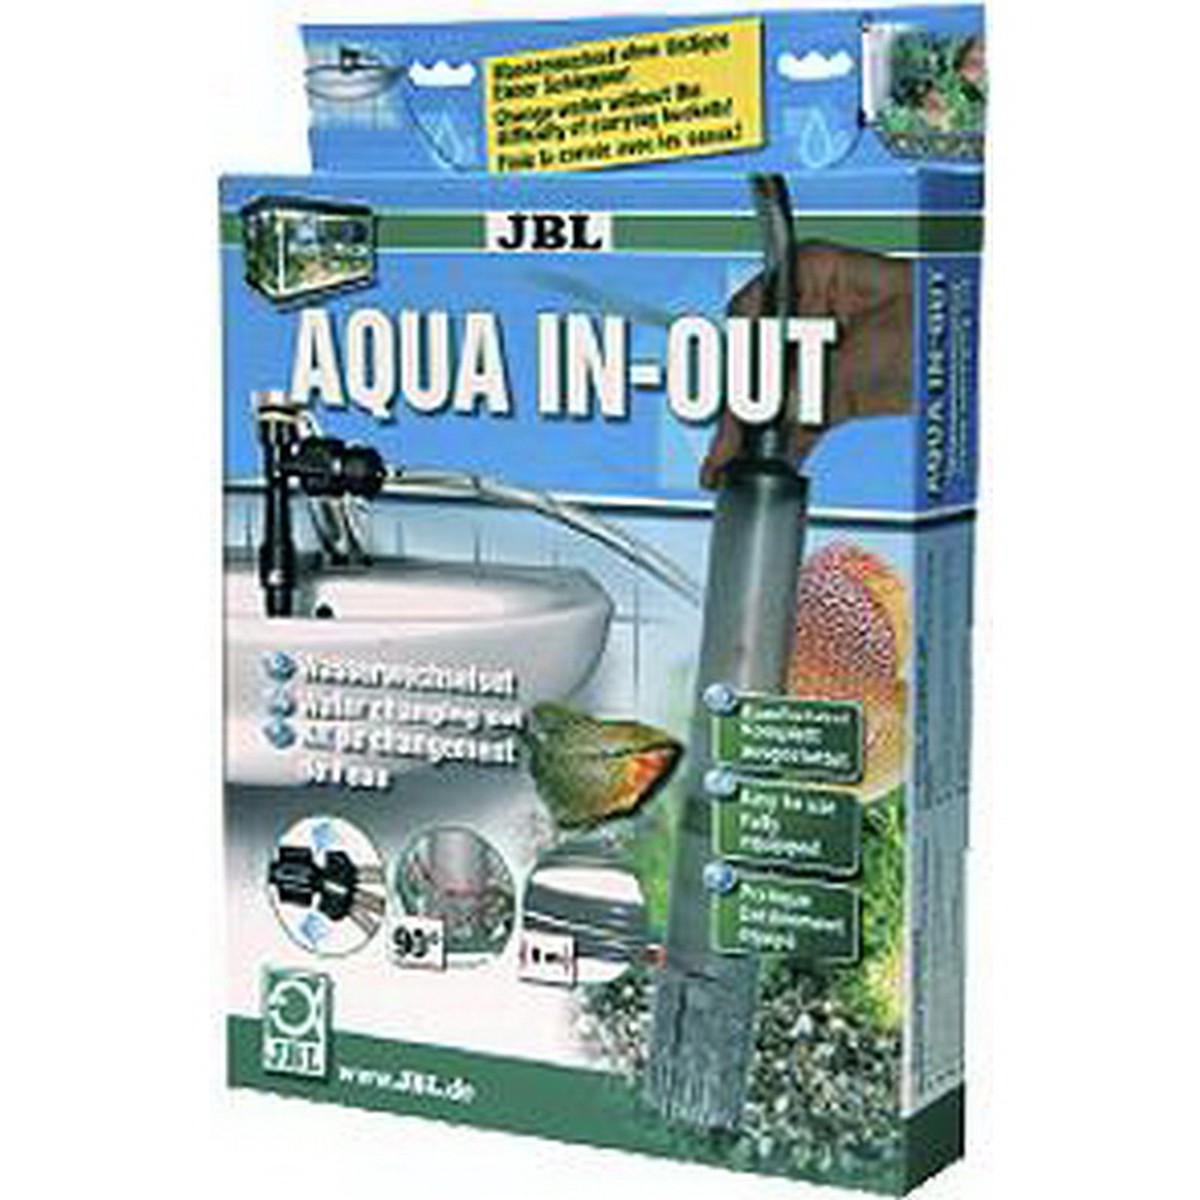   JBL Aqua In-Out appareil nettoyage  